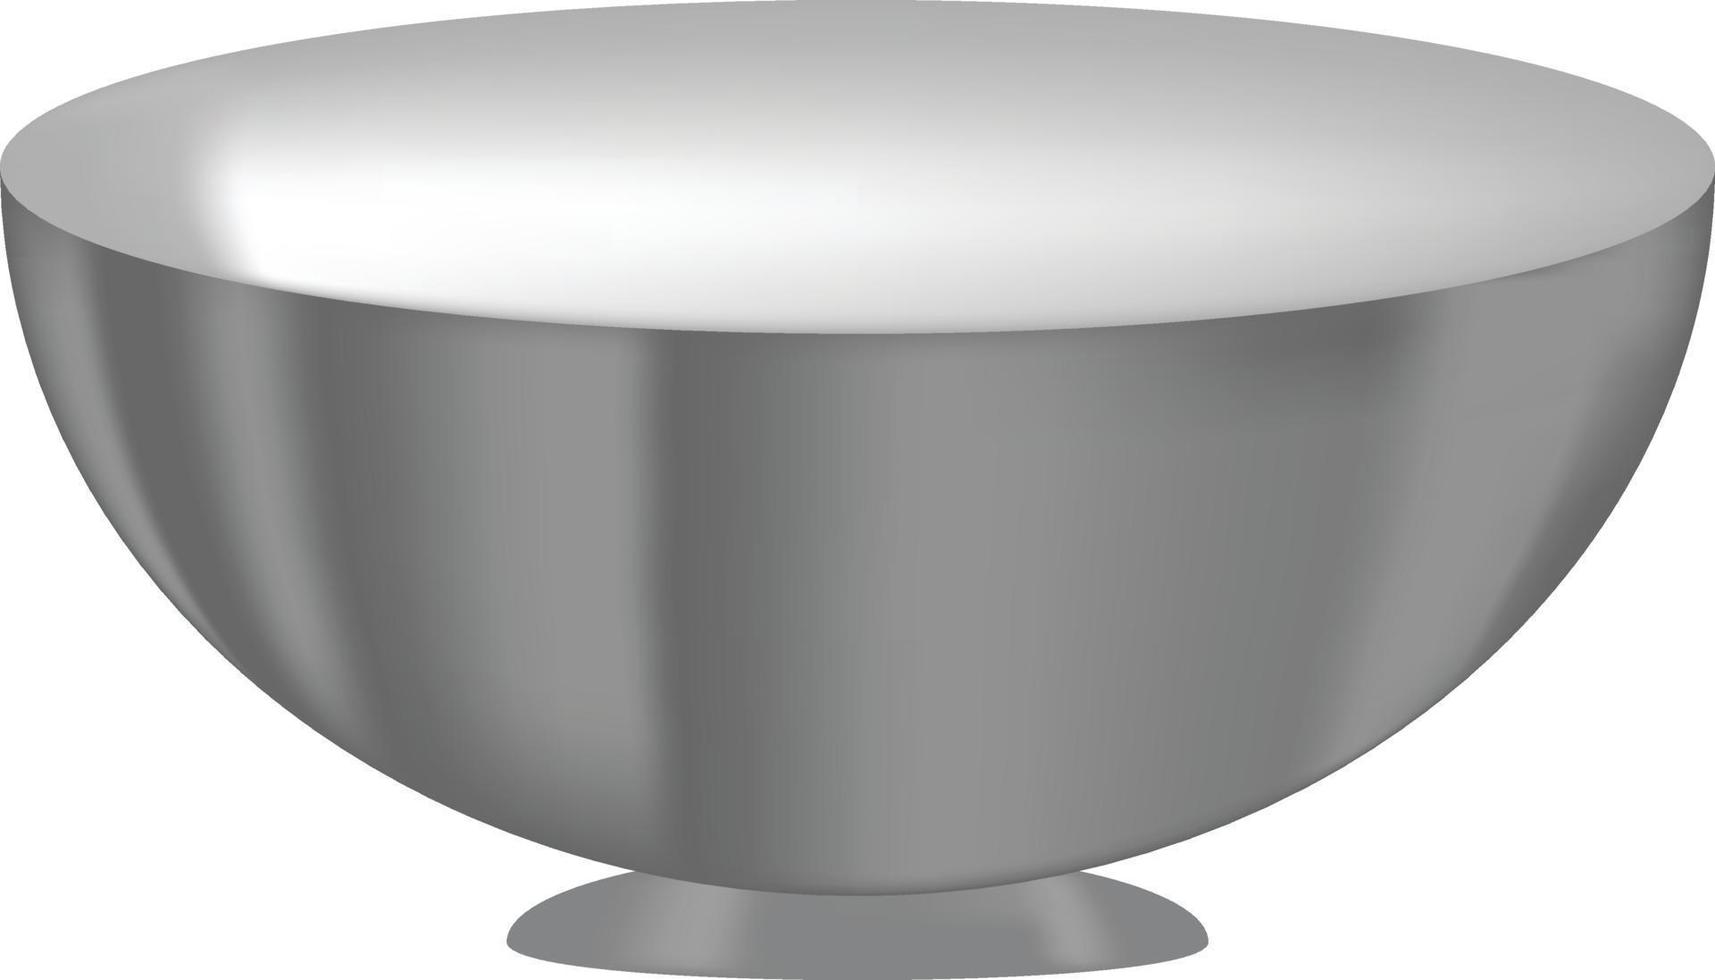 3d bowl icon design concept for design element vector